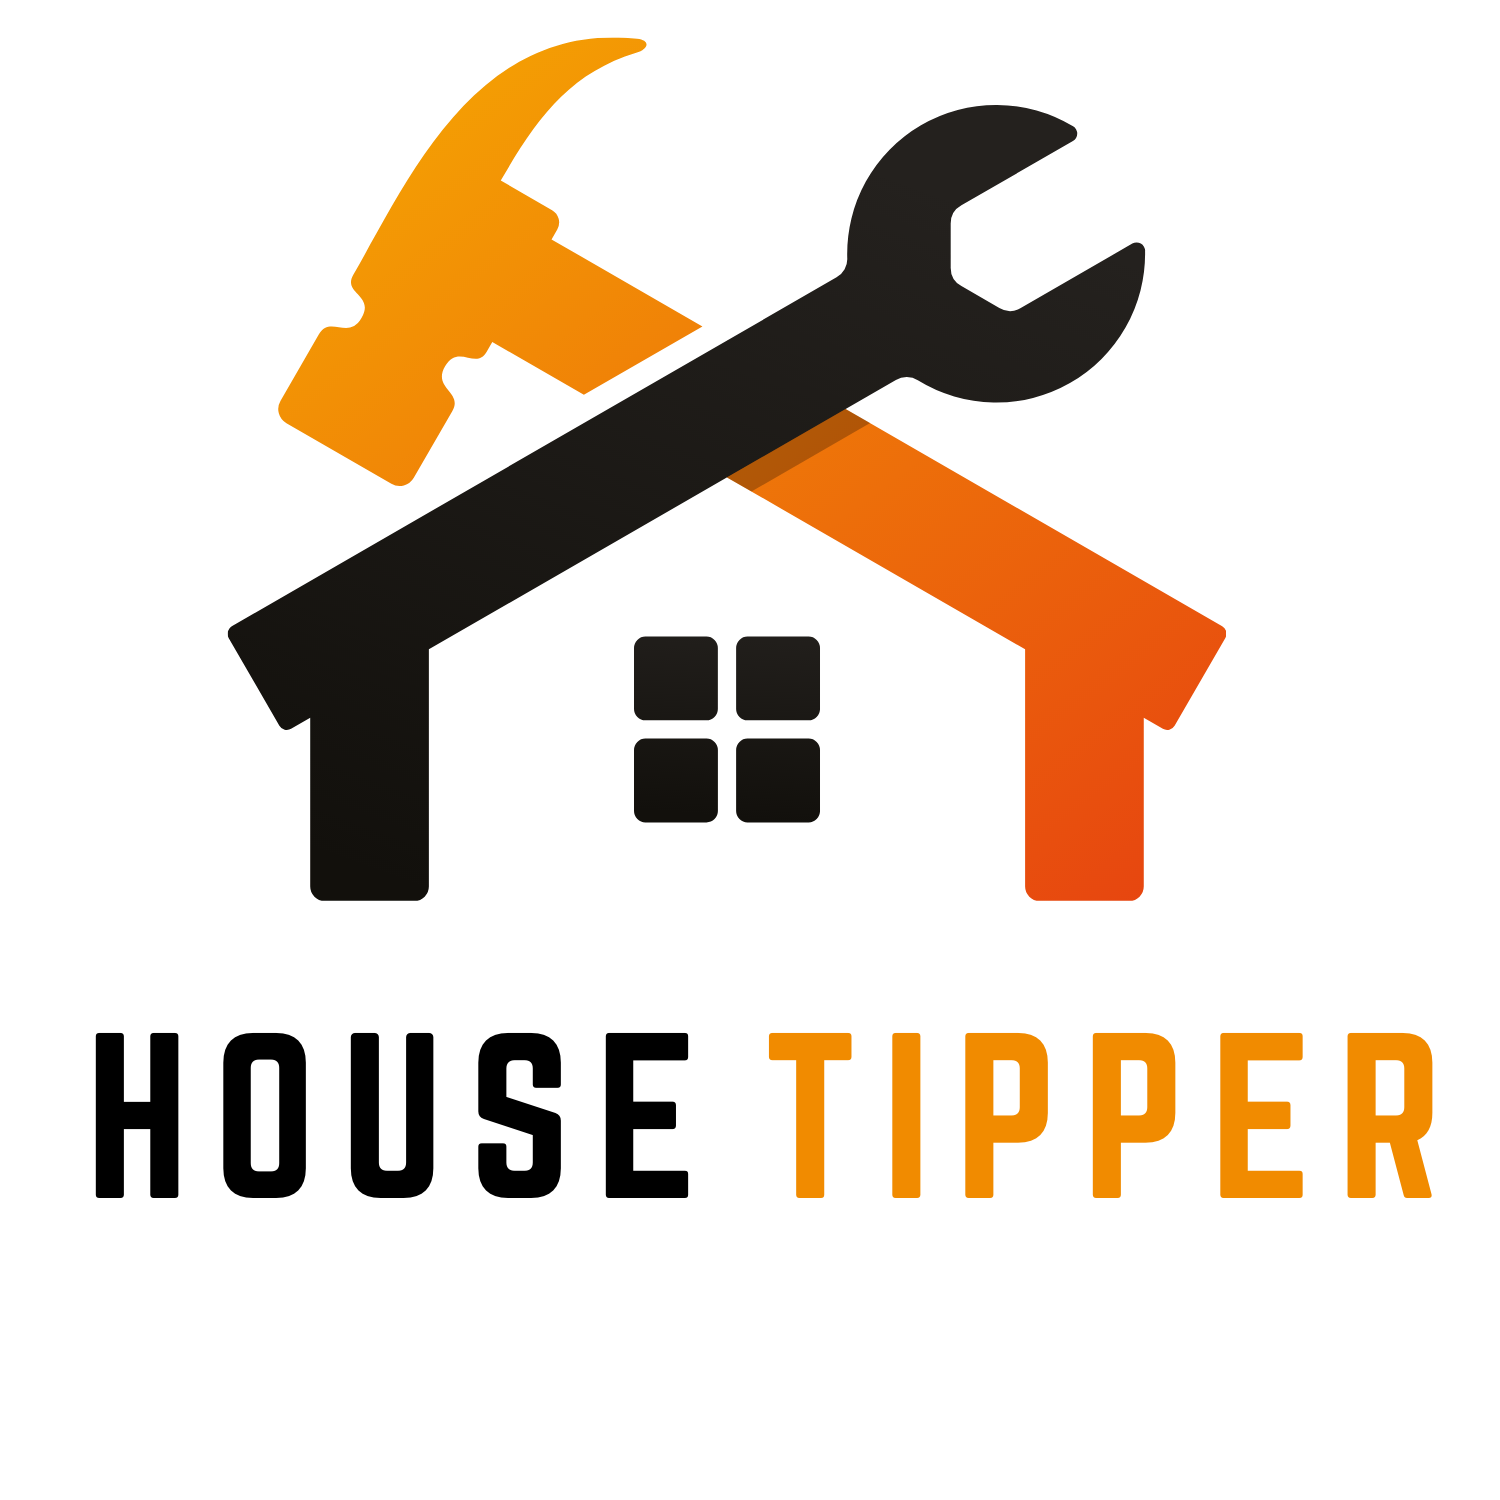 house tipper logo